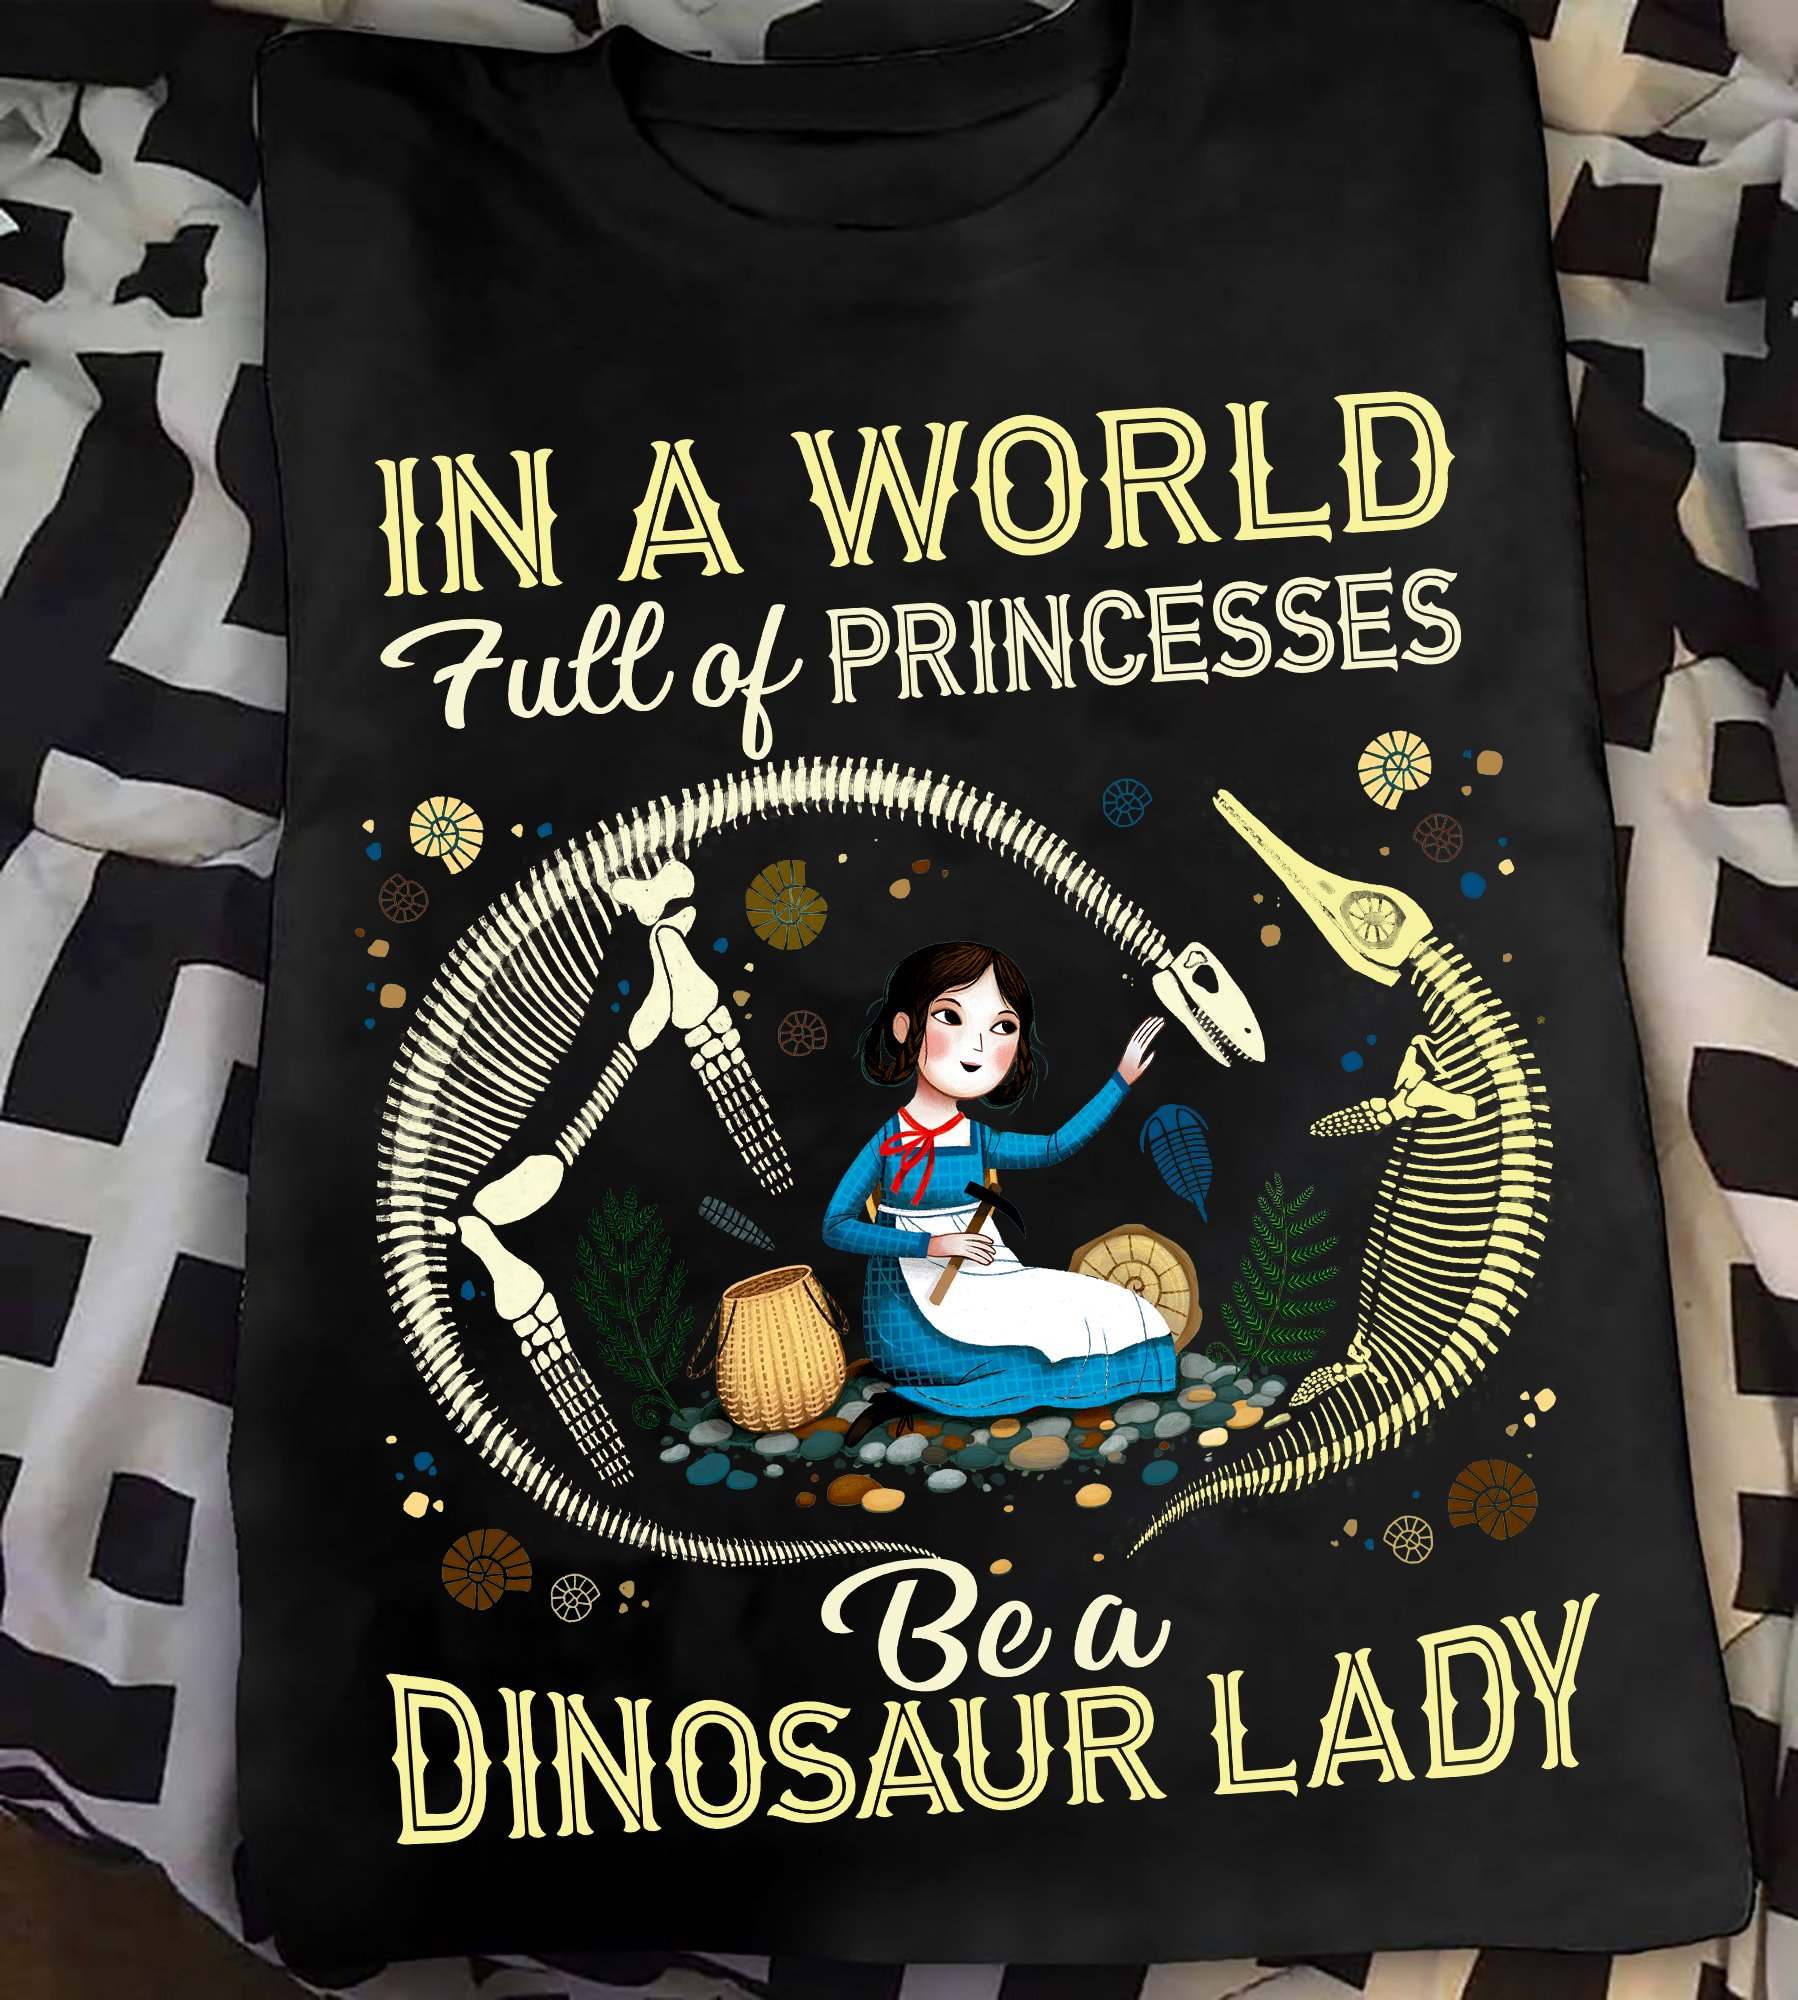 In a world full of princesses be a dinosaur lady - Lady love dinosaur Shirt,  Hoodie, Sweatshirt - FridayStuff